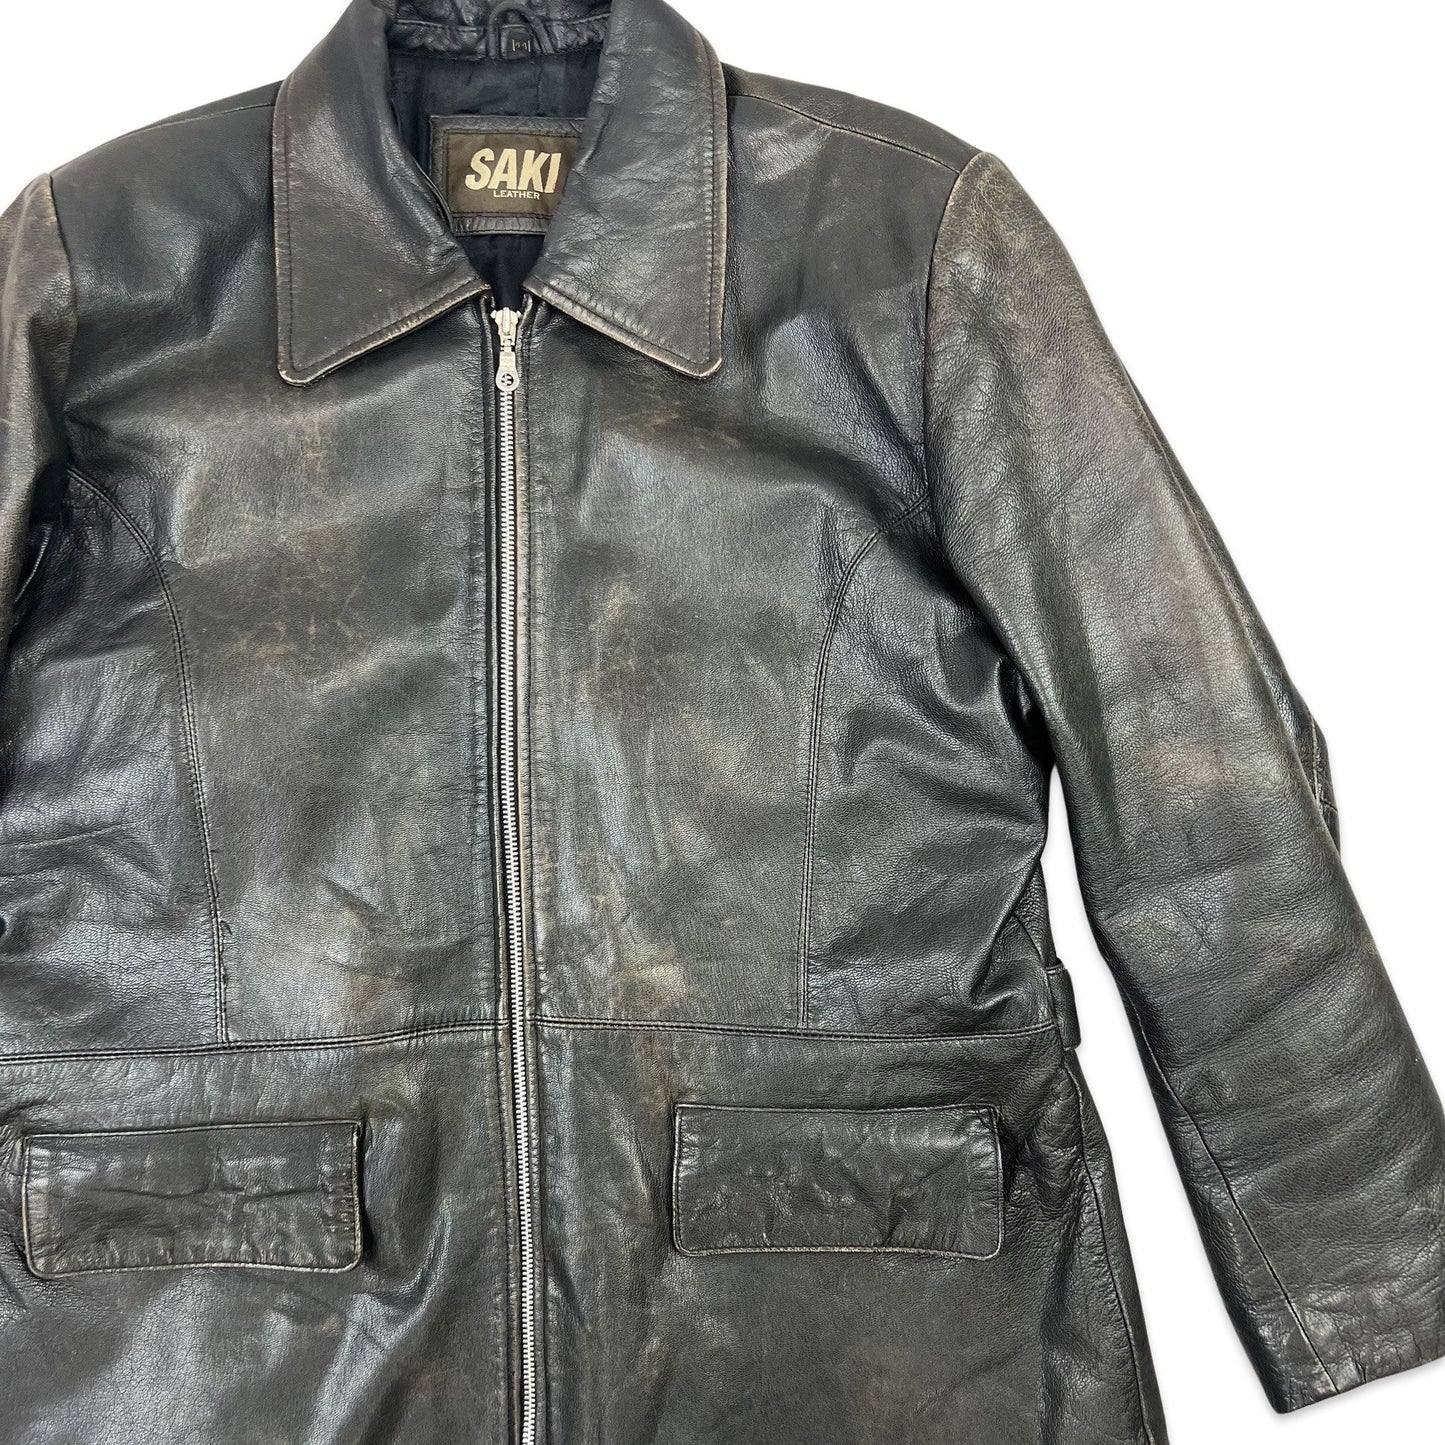 Vintage 90s Leather Jacket Black 14 16